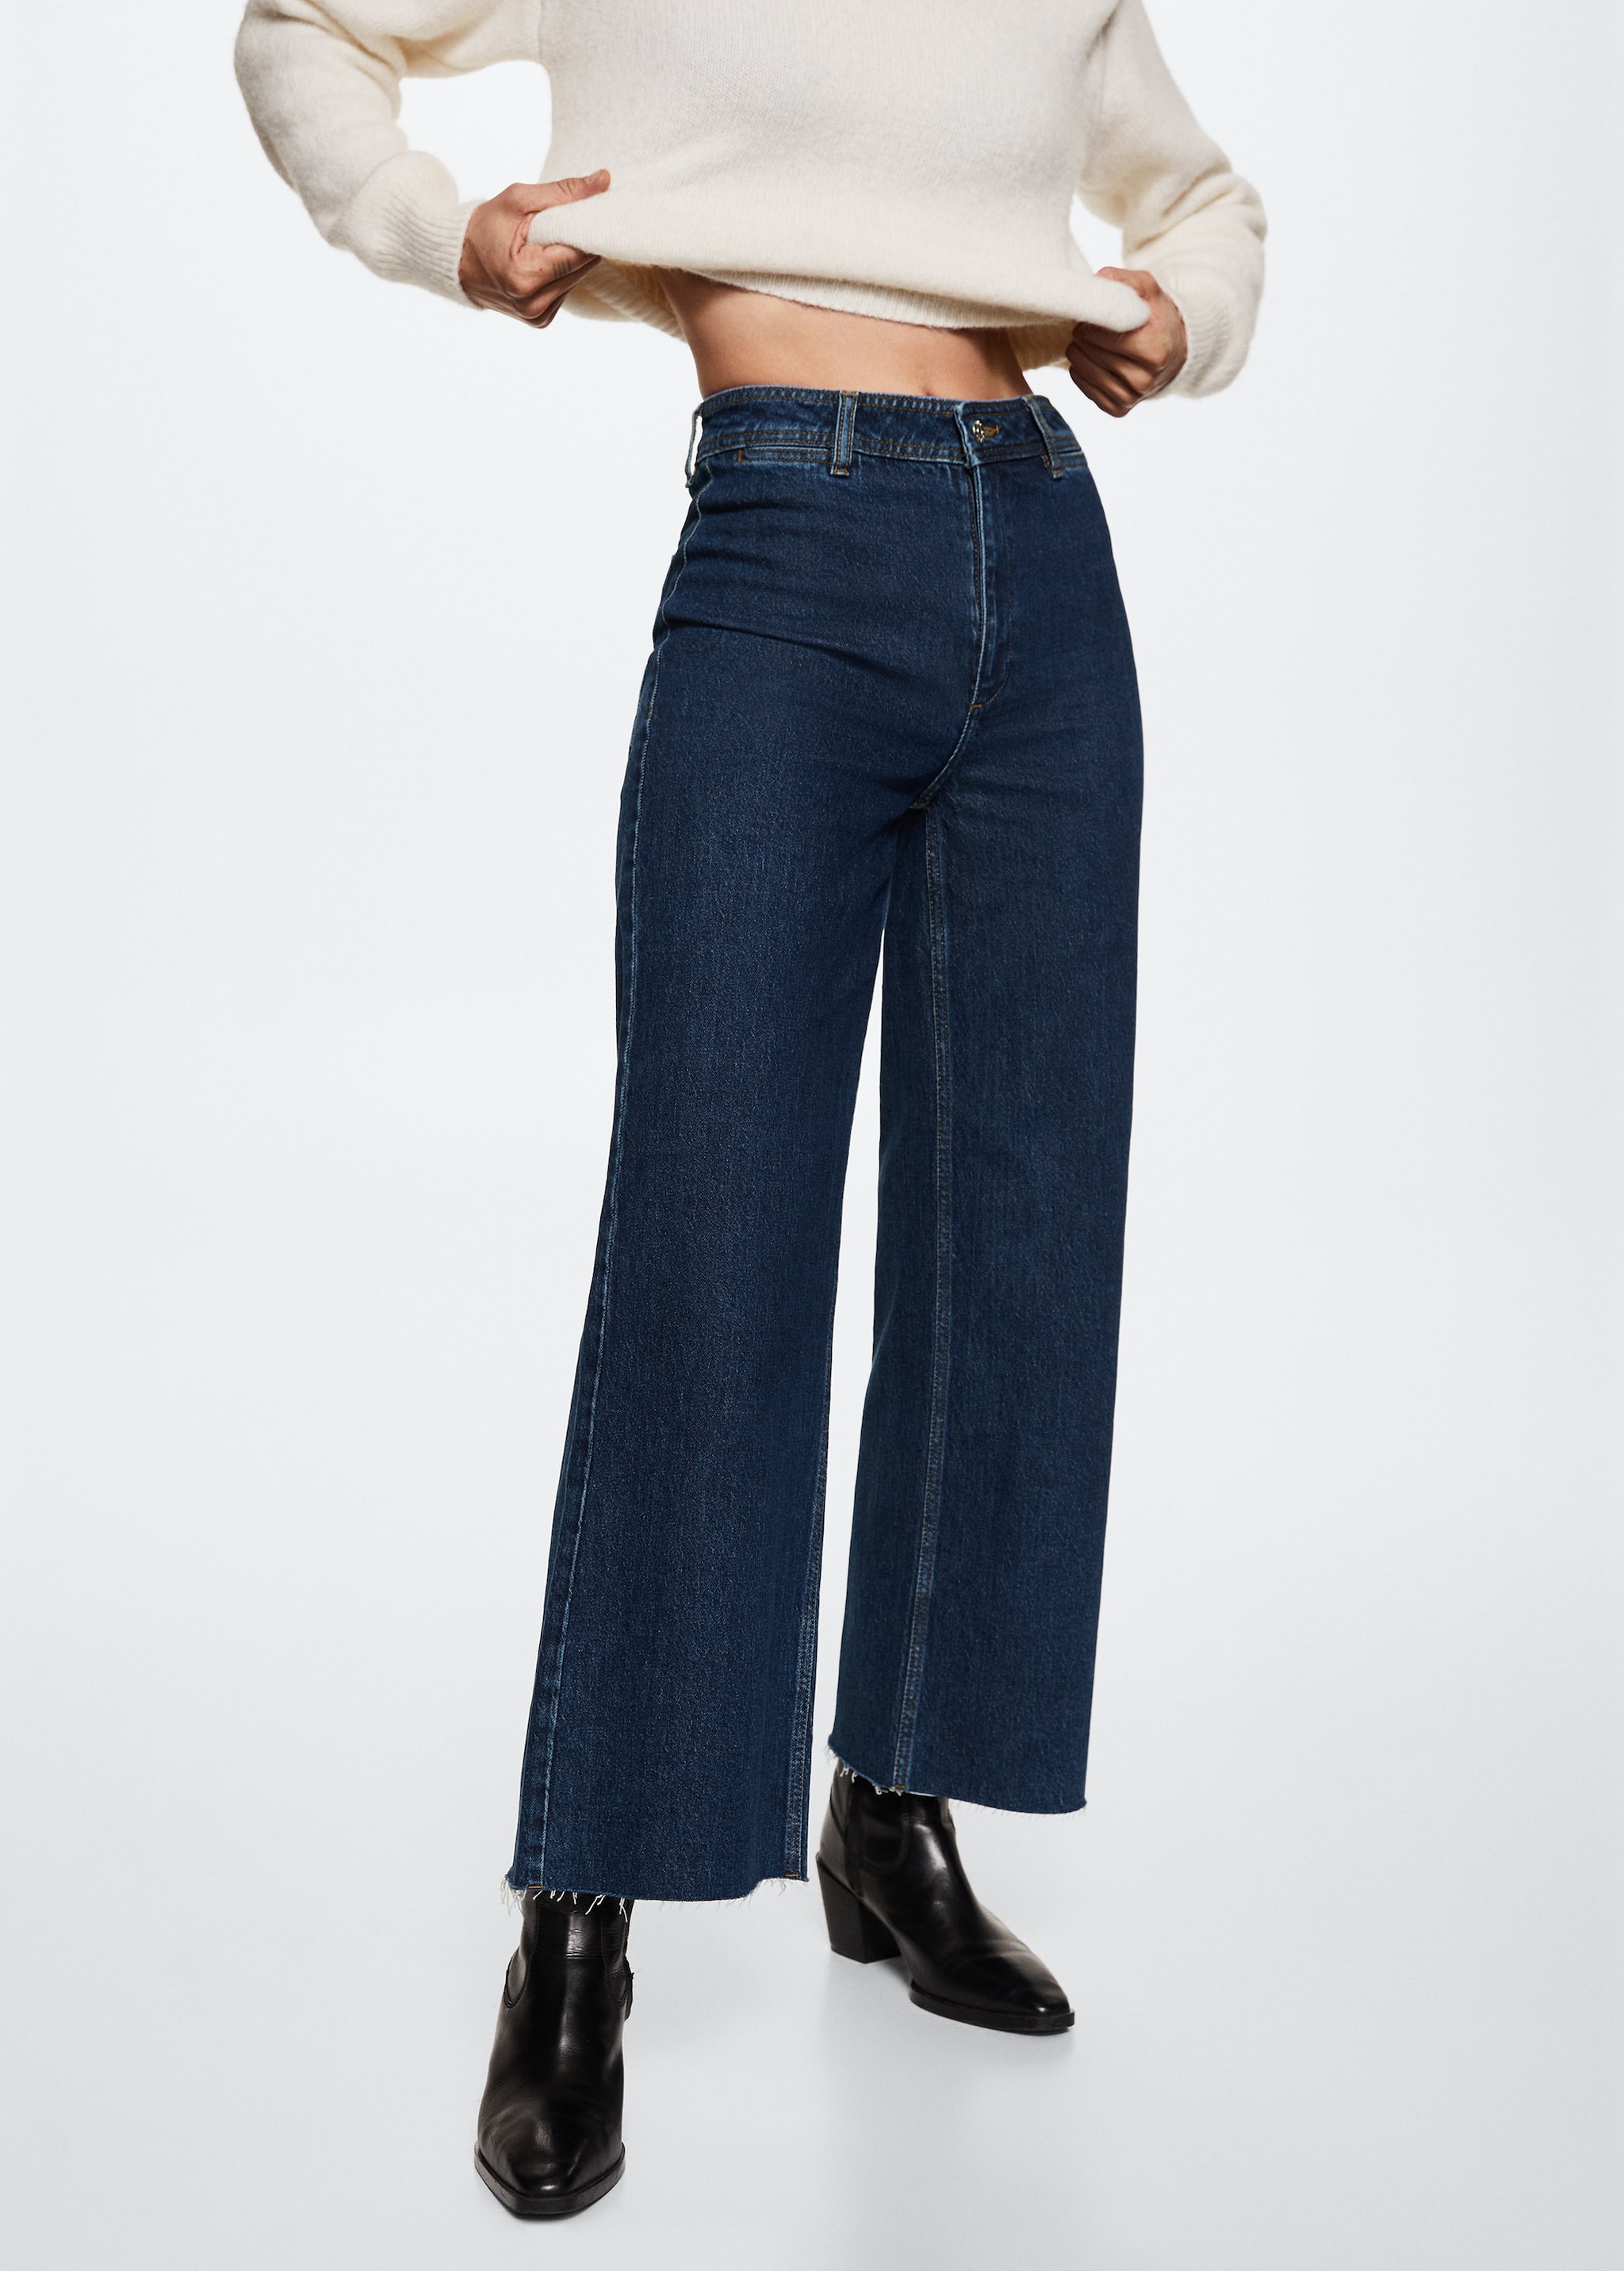 Jeans culotte high waist - Medium plane